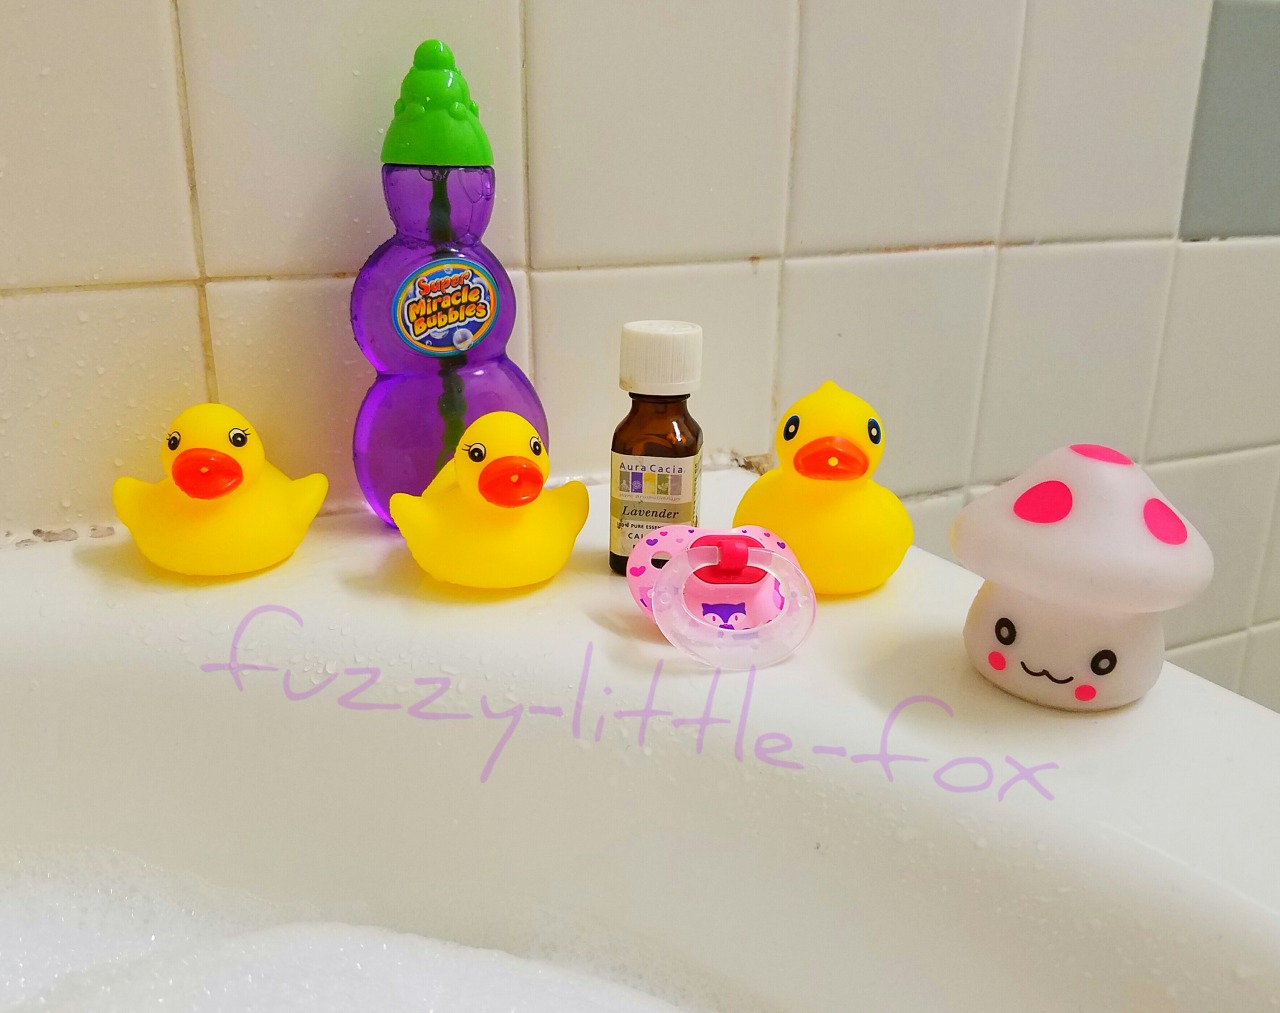 fuzzy-little-fox: Bath time!! 